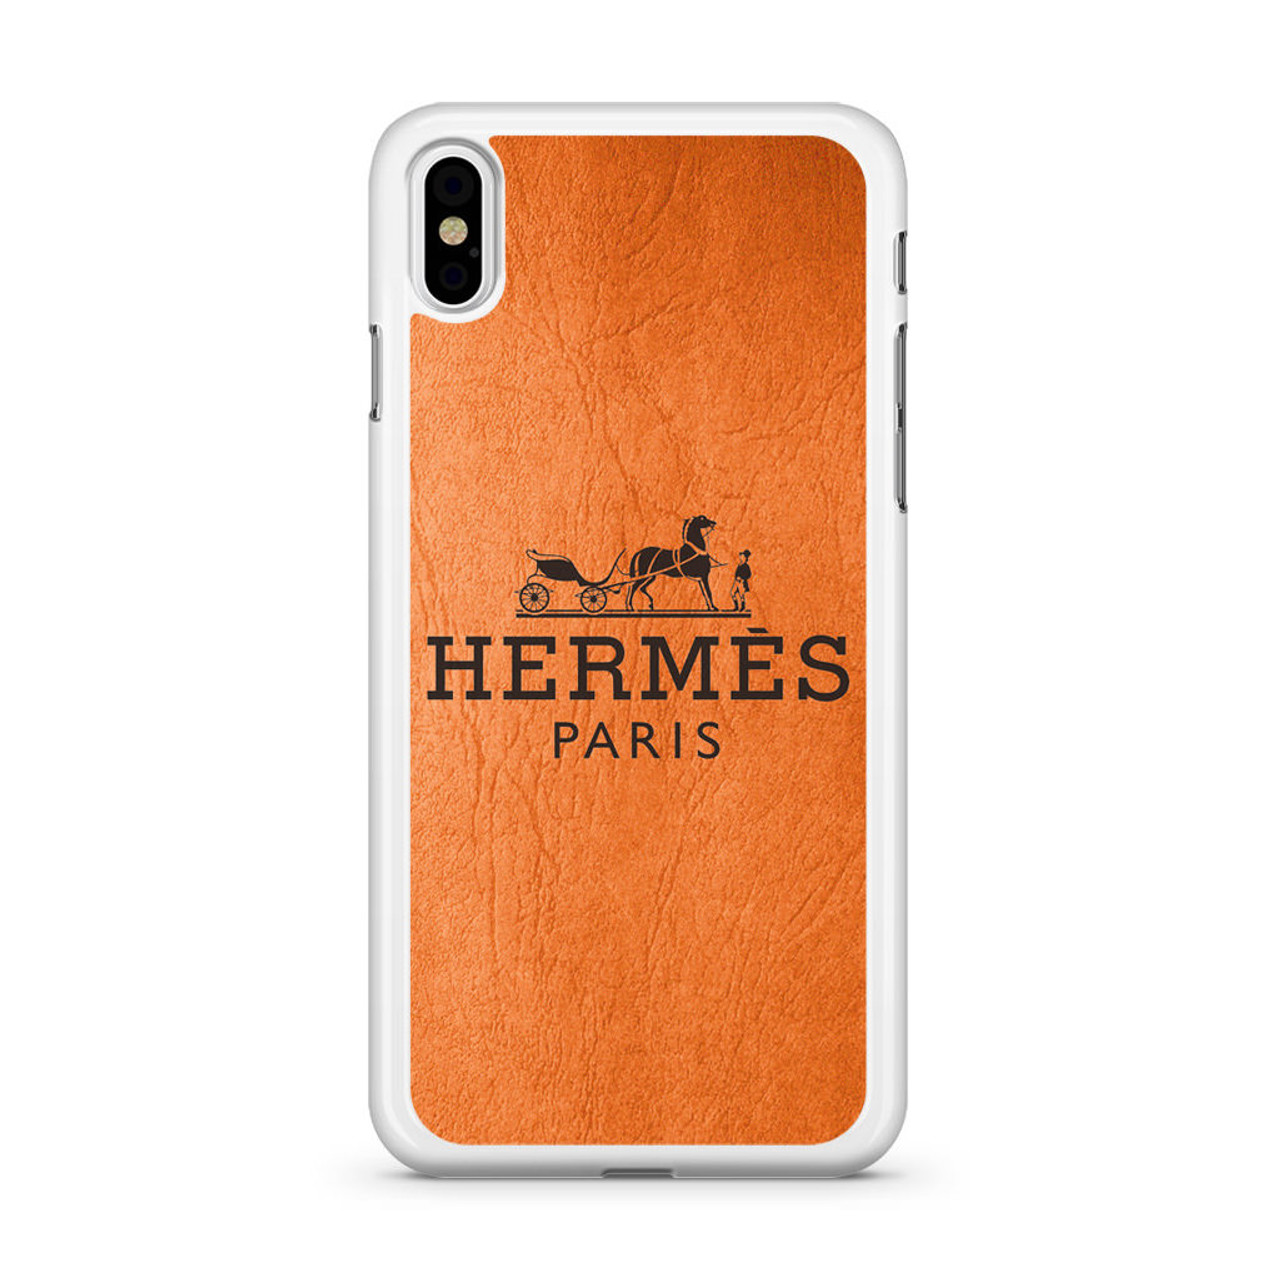 Hermes Paris iPhone XS Max Case 